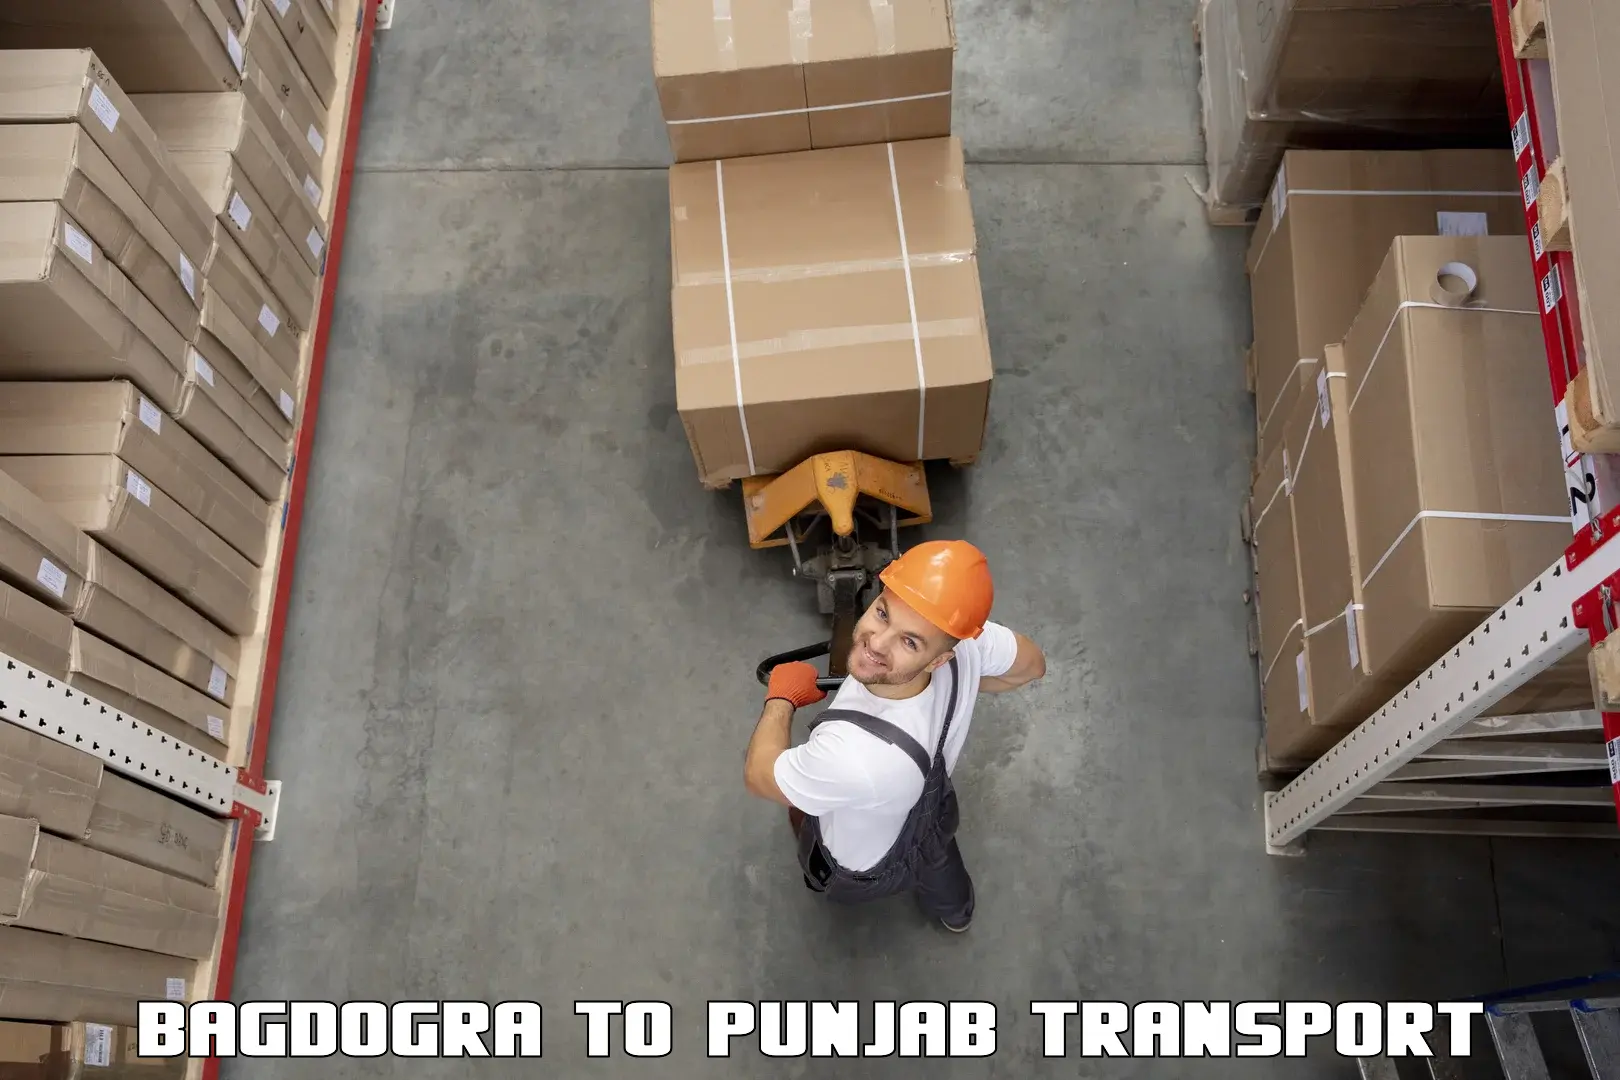 Transport in sharing Bagdogra to Pathankot